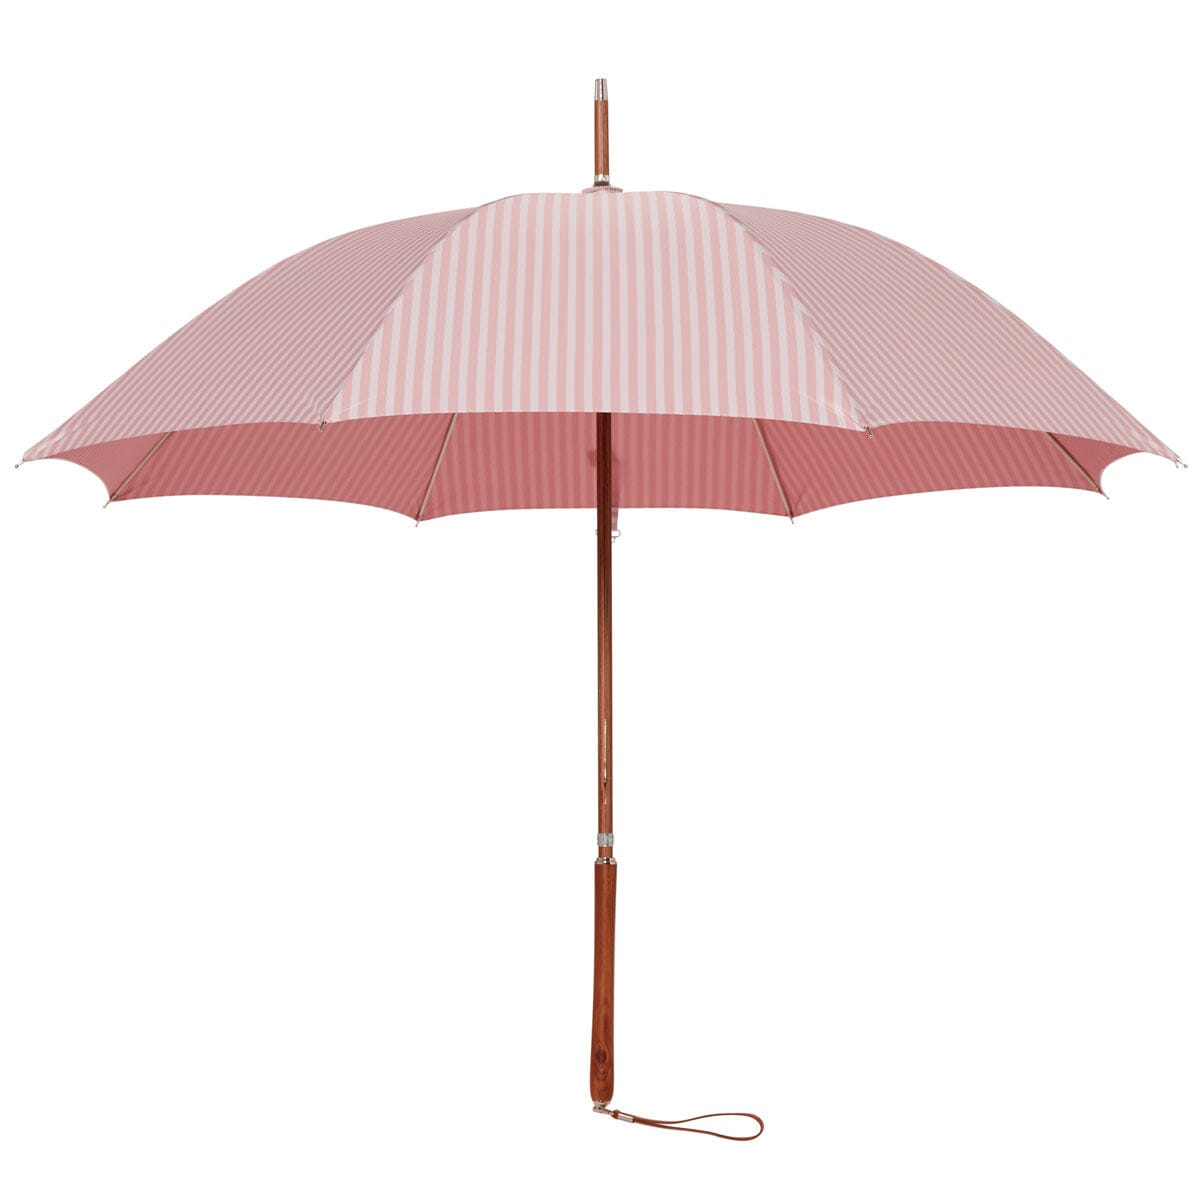 The Rain Umbrella - Lauren's Pink Stripe Rain Umbrella Business & Pleasure Co 